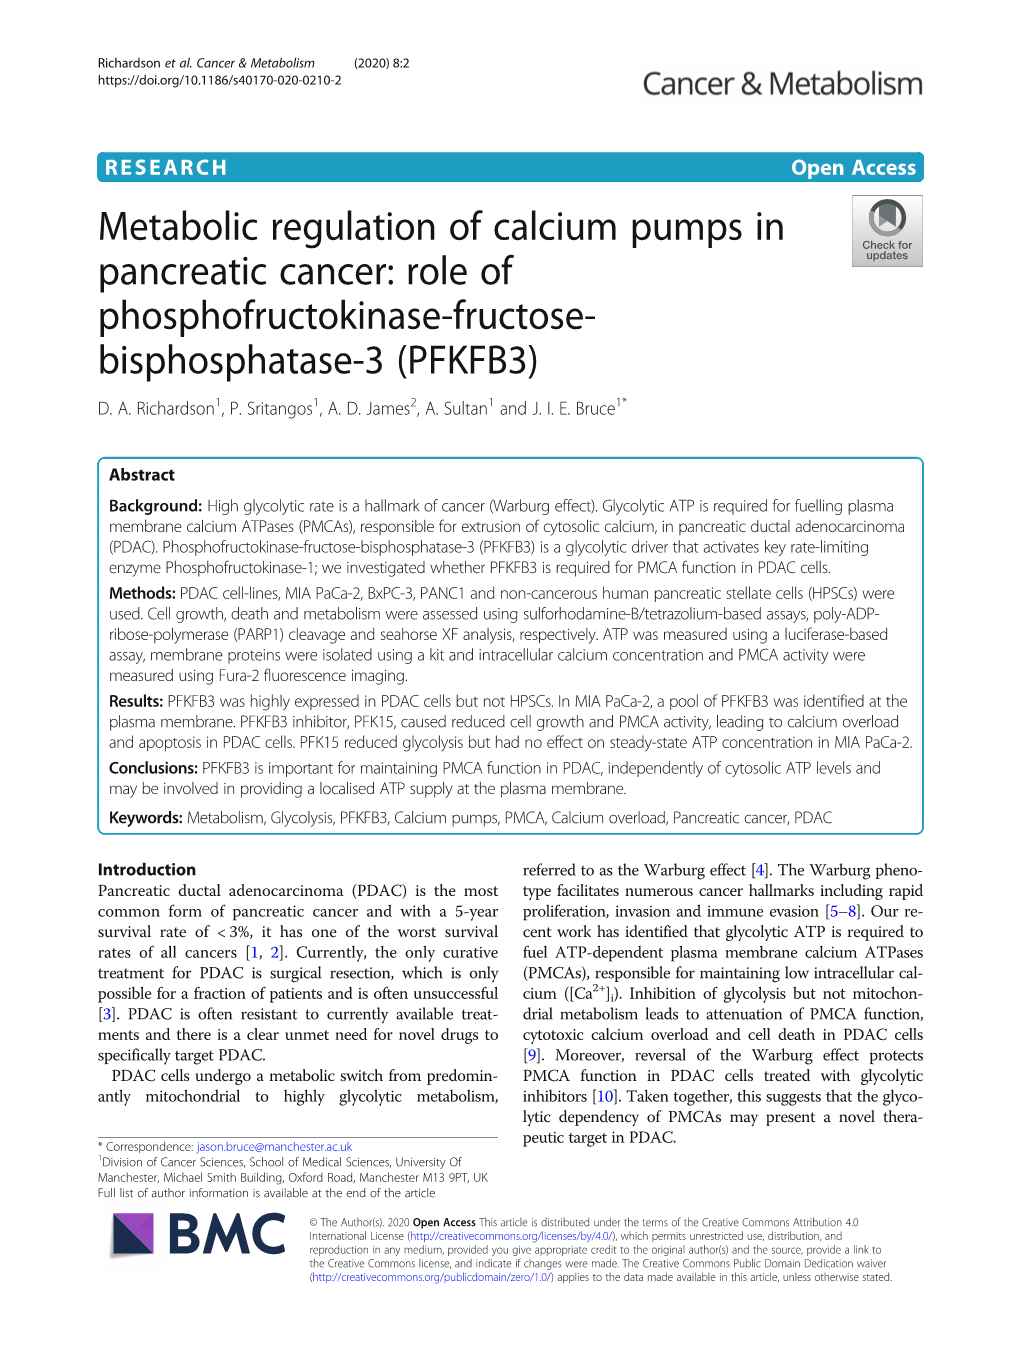 Metabolic Regulation of Calcium Pumps in Pancreatic Cancer: Role of Phosphofructokinase-Fructose- Bisphosphatase-3 (PFKFB3) D